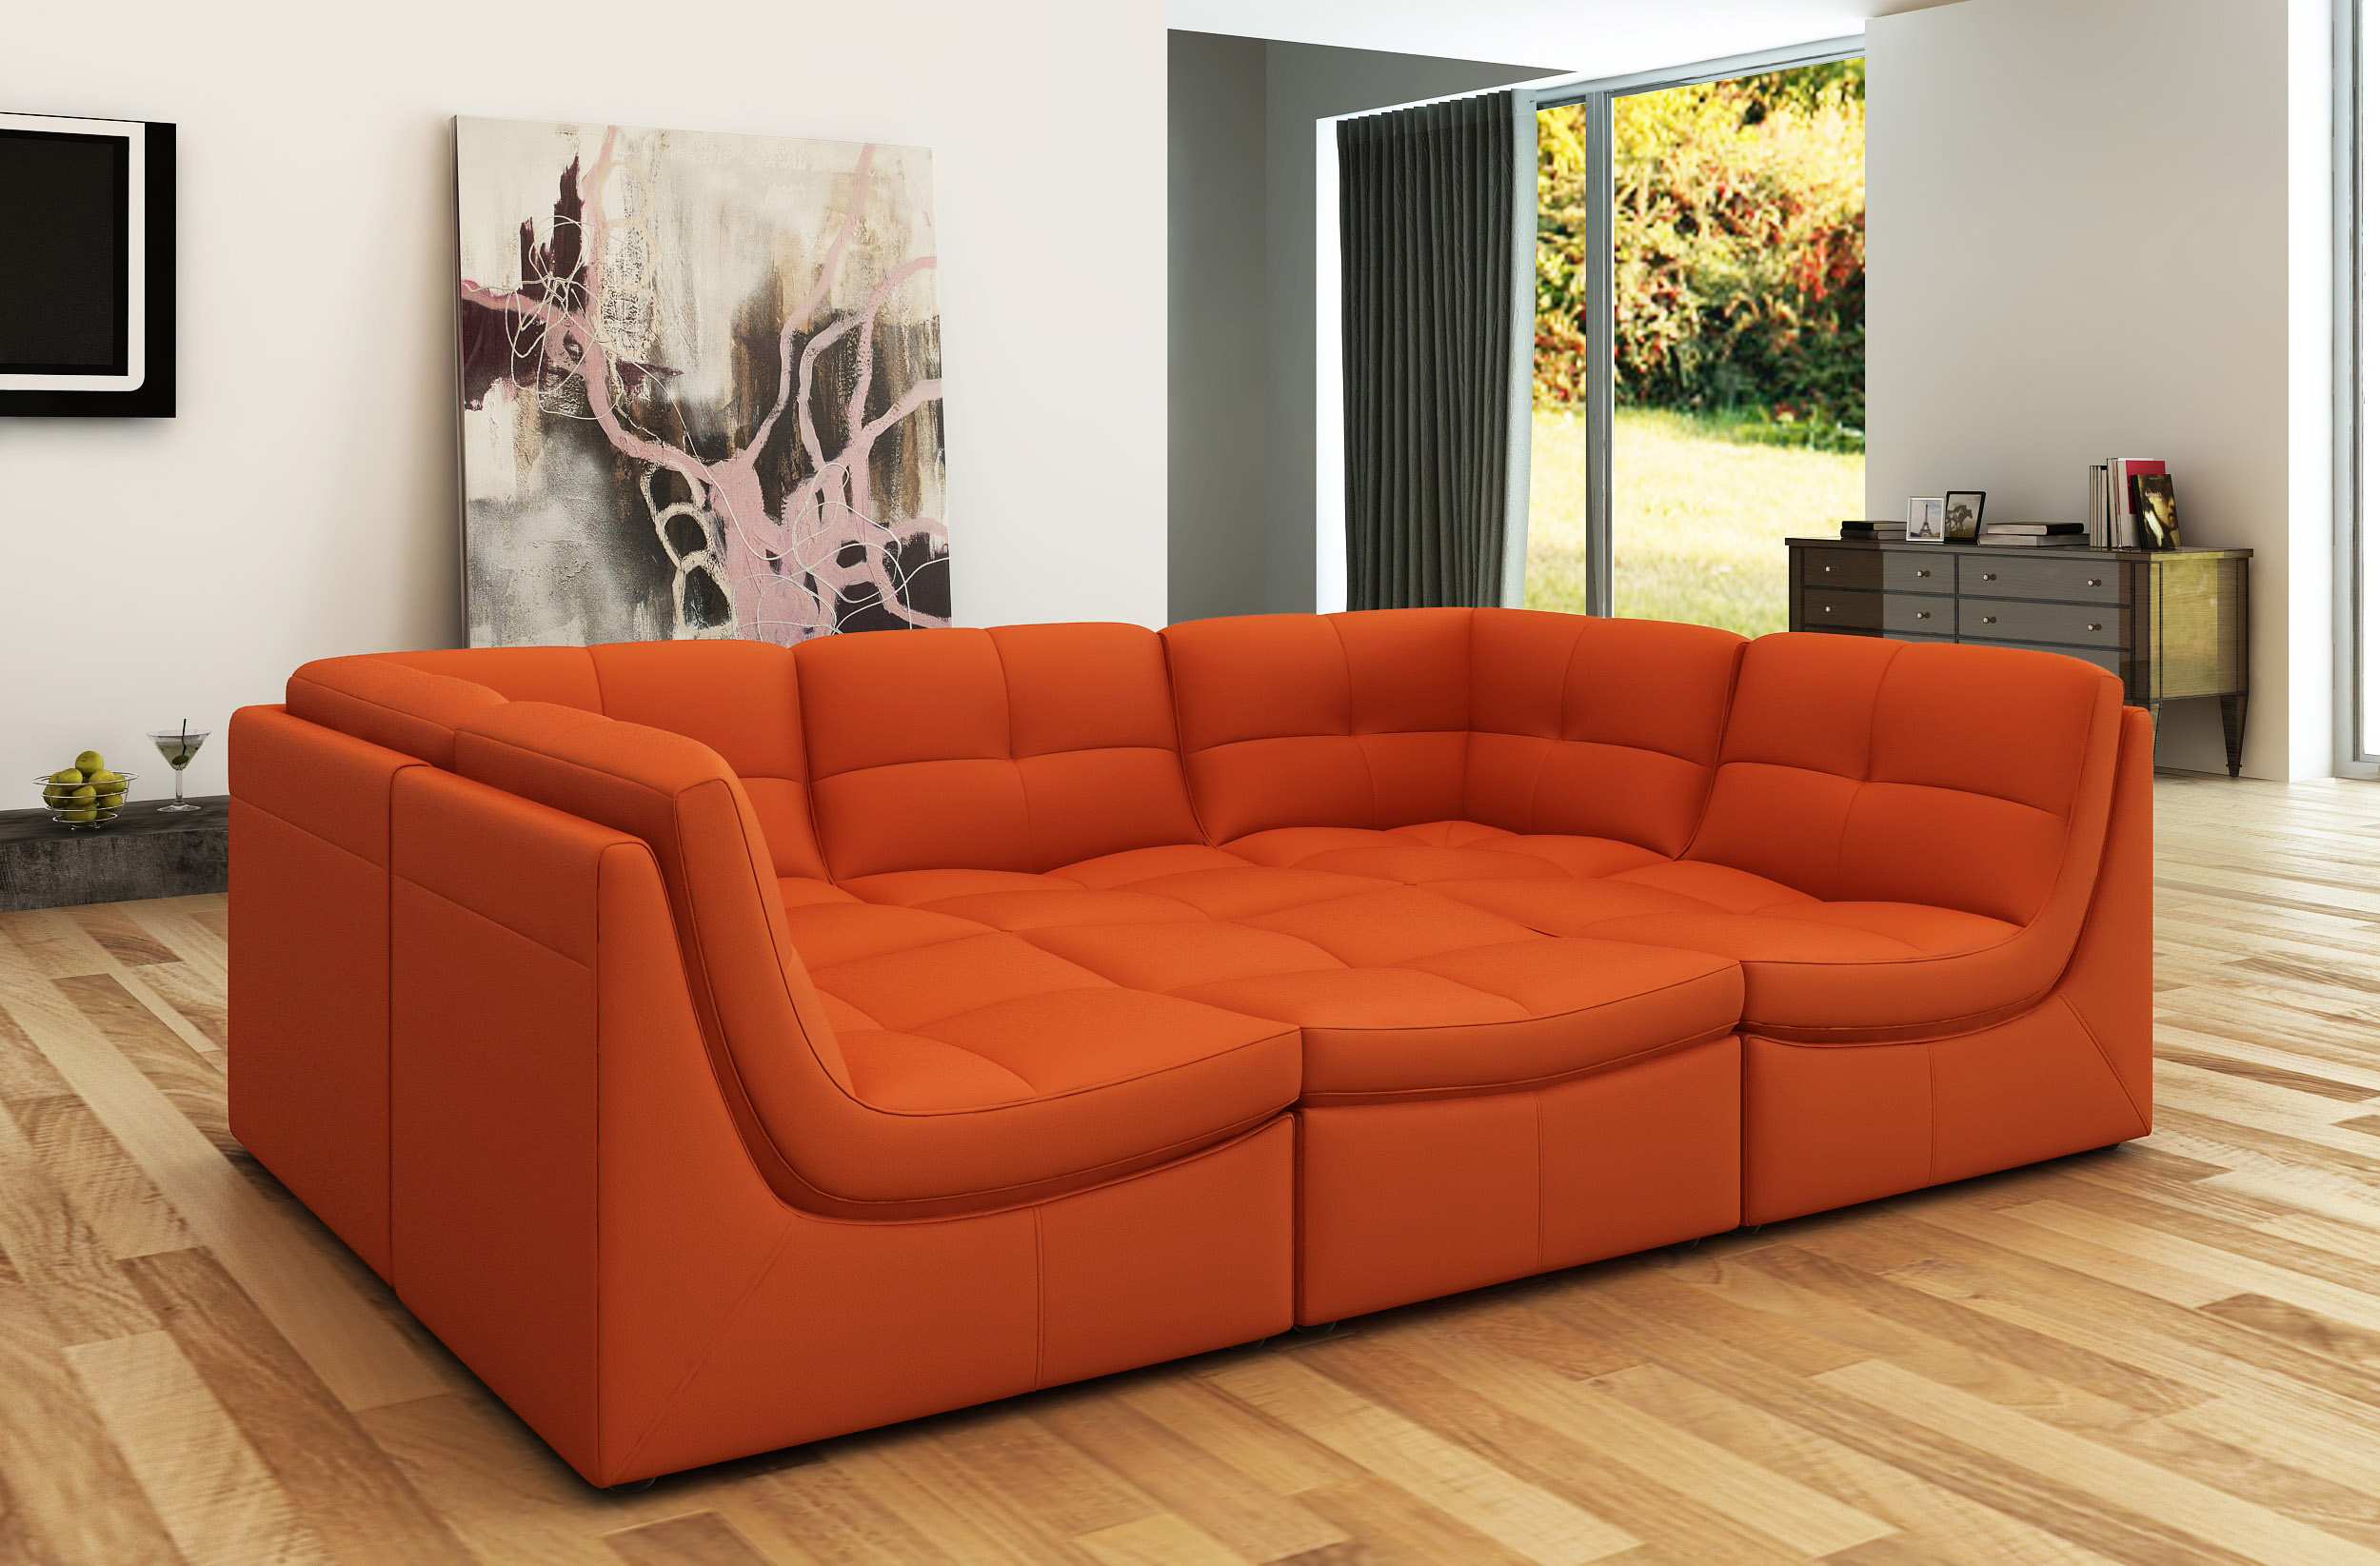 curved modular leather sofa